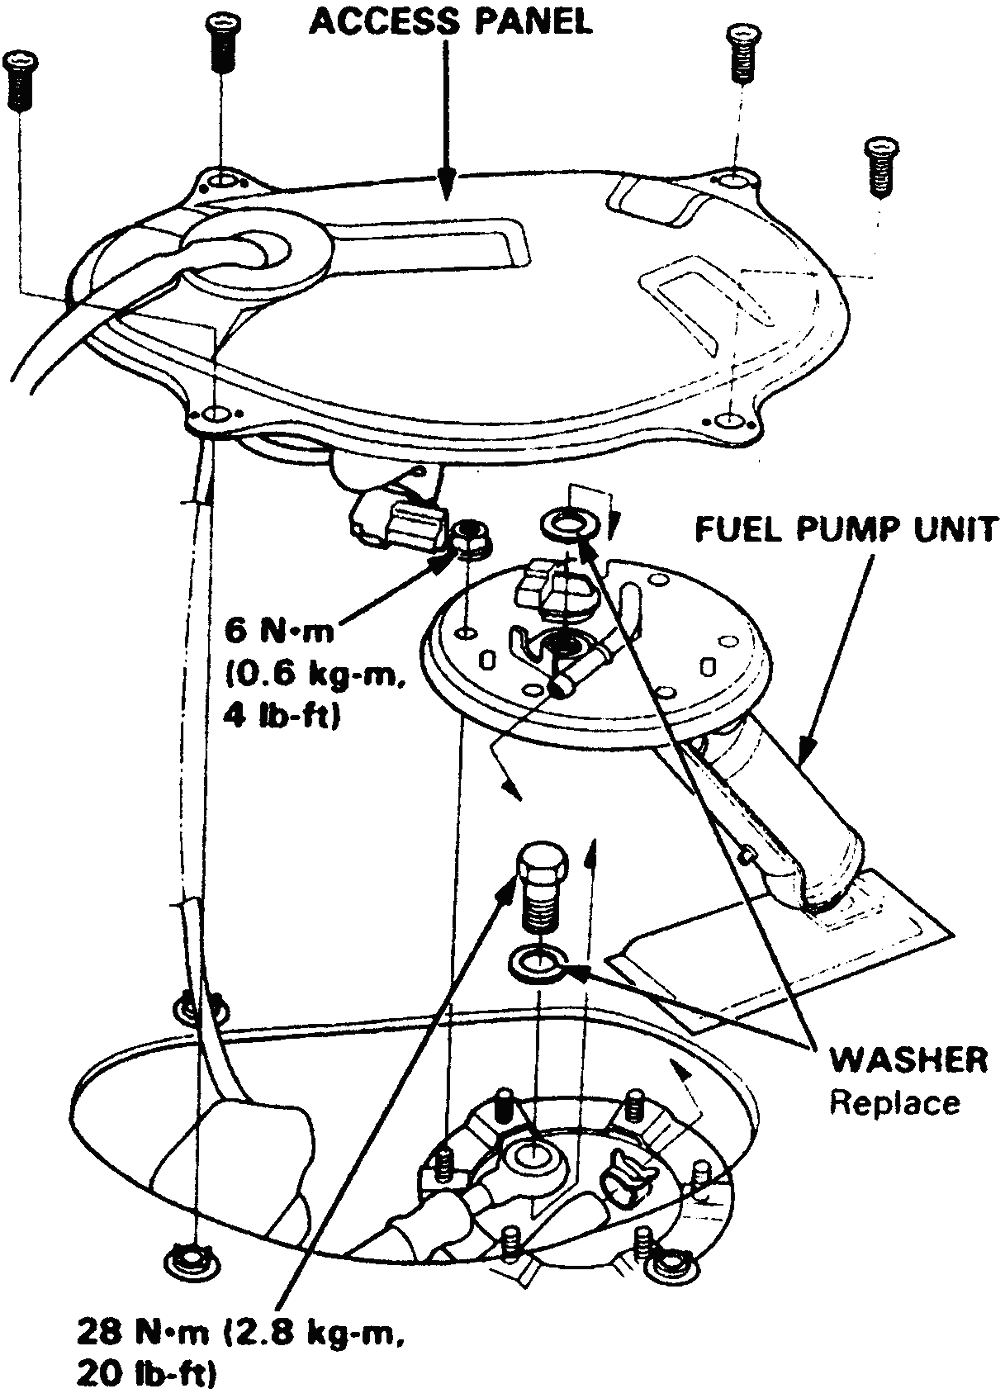 2000 Honda Civic Fuel Pump Relay - Honda Civic